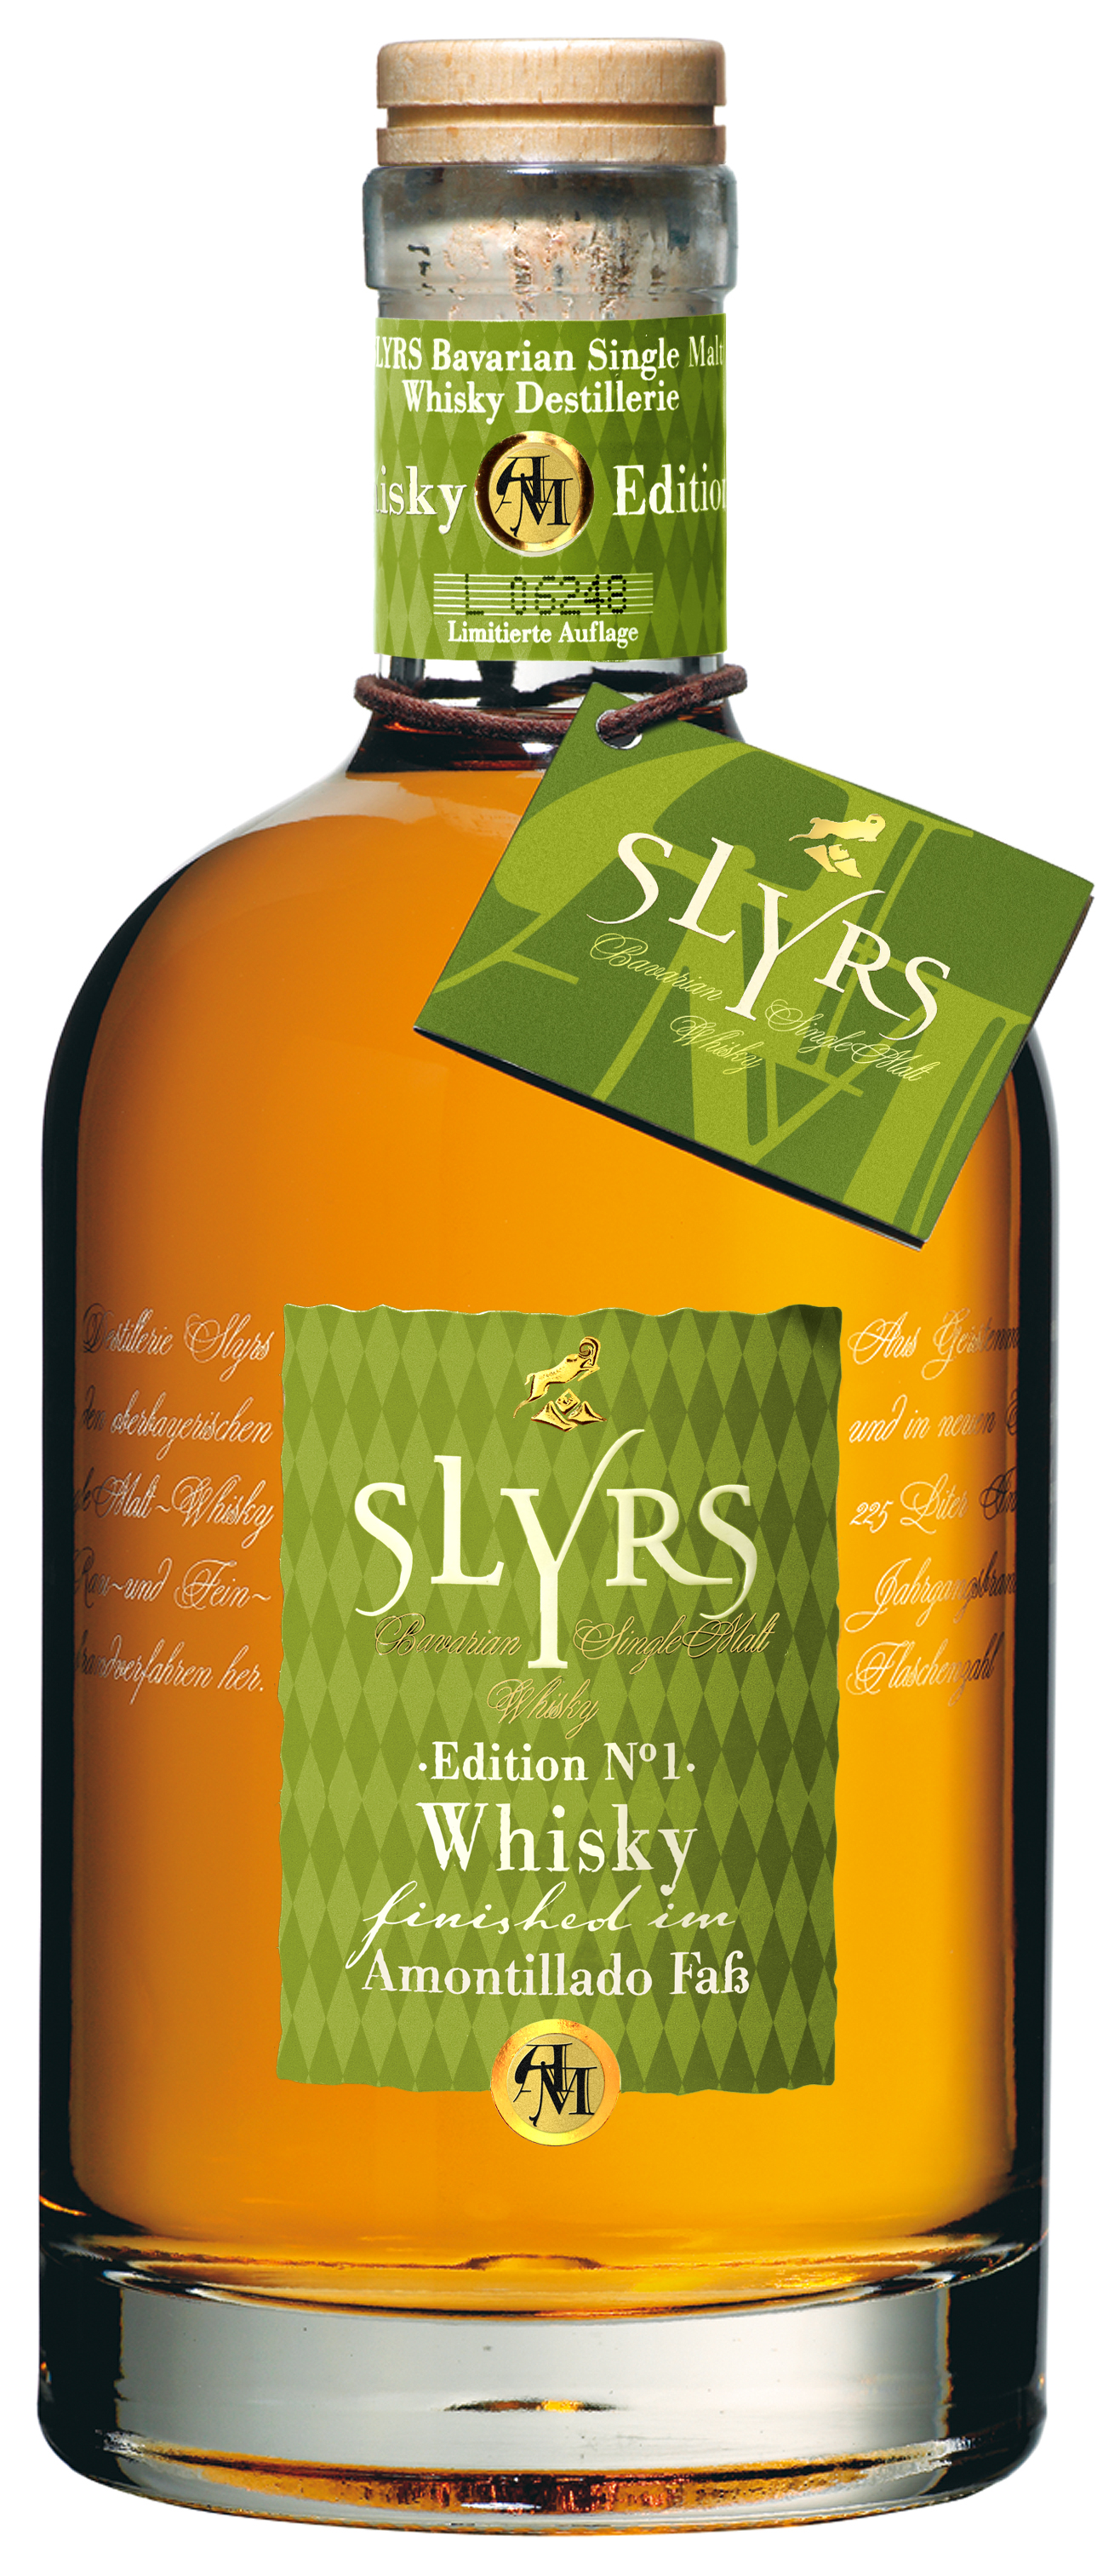 Slyrs Whisky Amontillado finished Edition No. 1